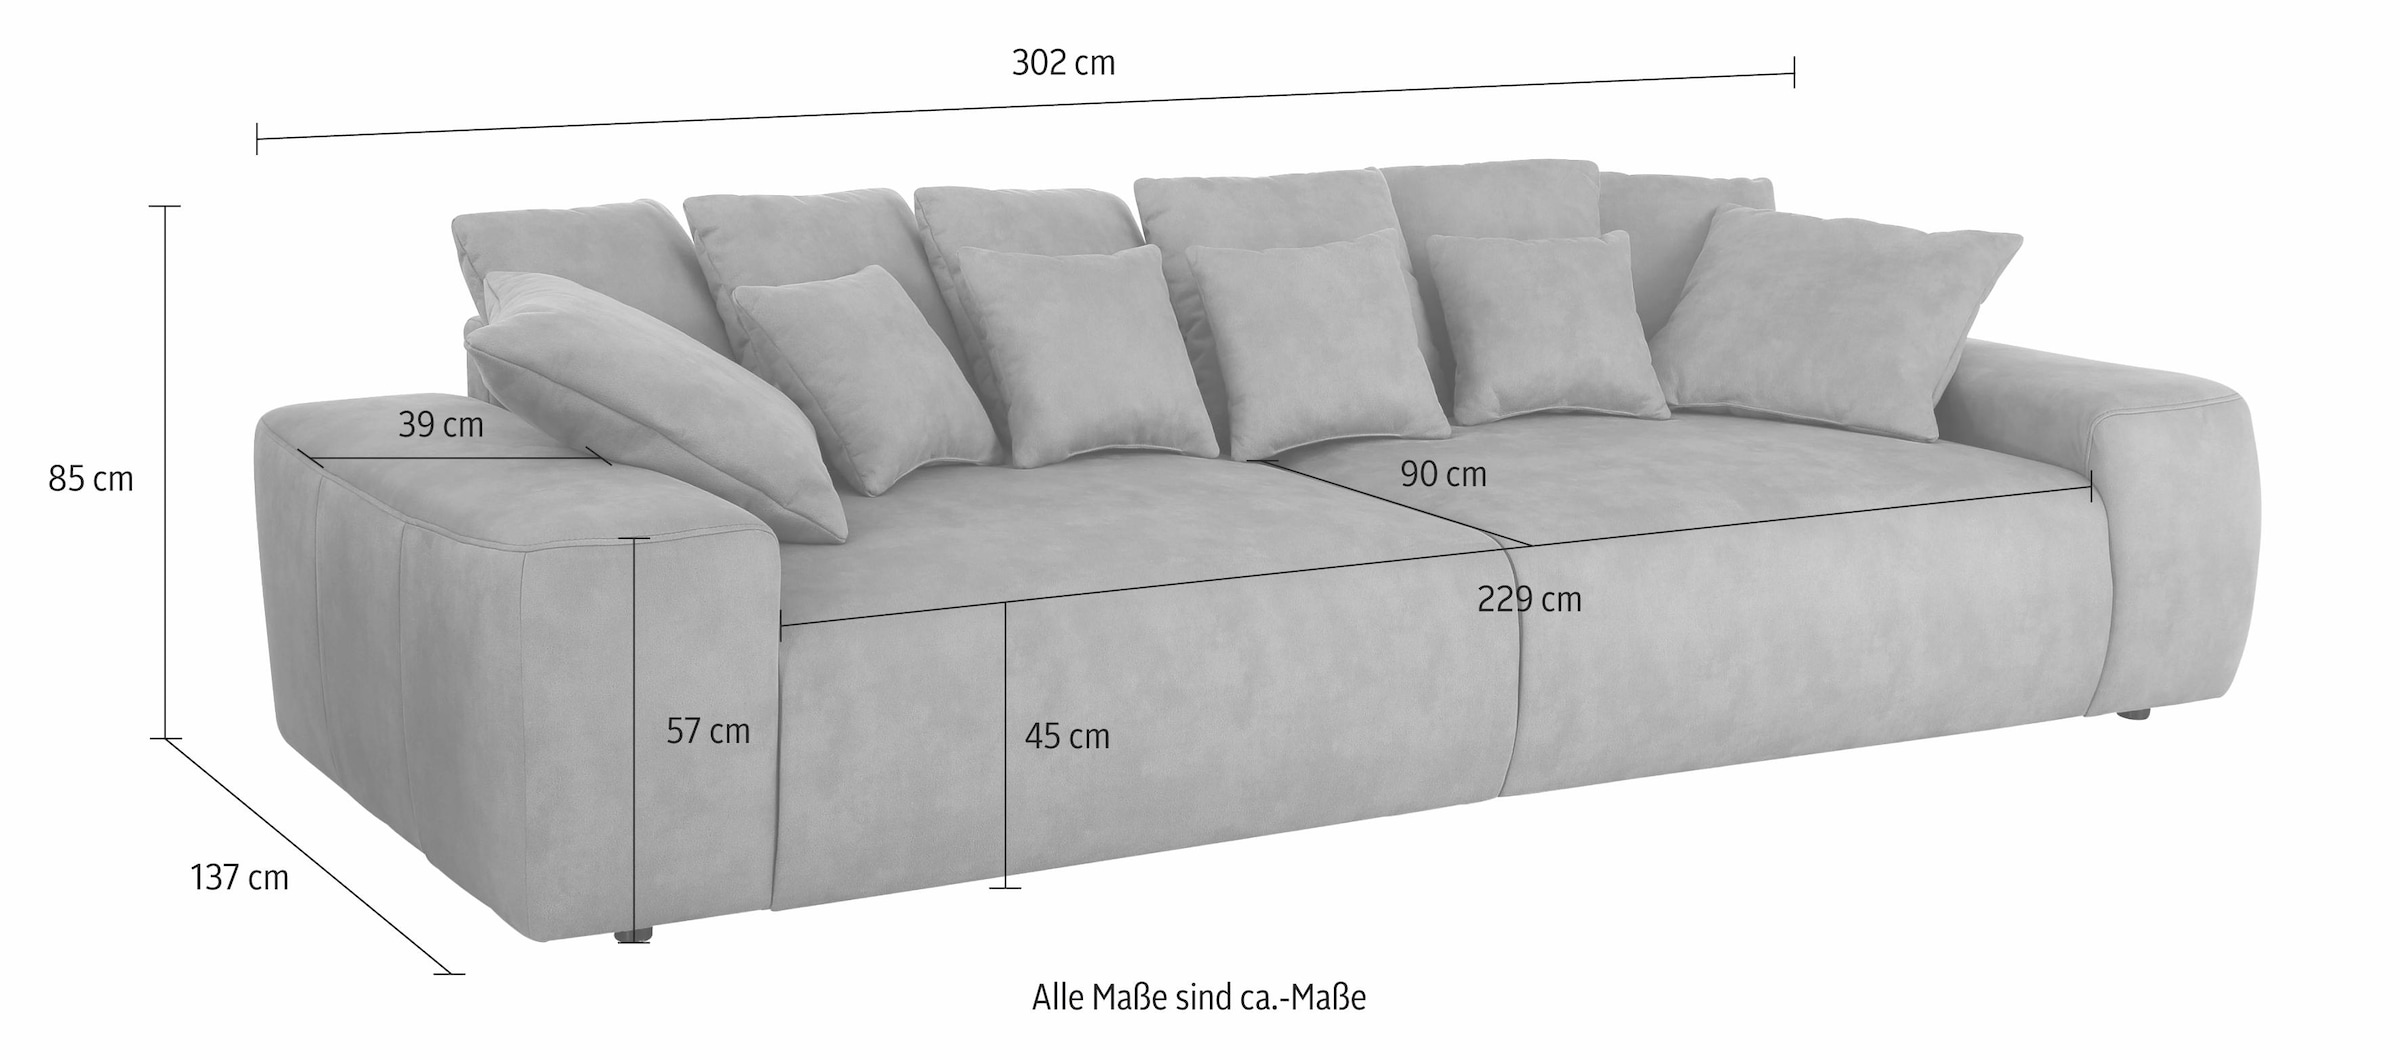 Home affaire Big-Sofa »Glamour«, Boxspringfederung, Breite 302 cm, Lounge Sofa mit vielen losen Kissen